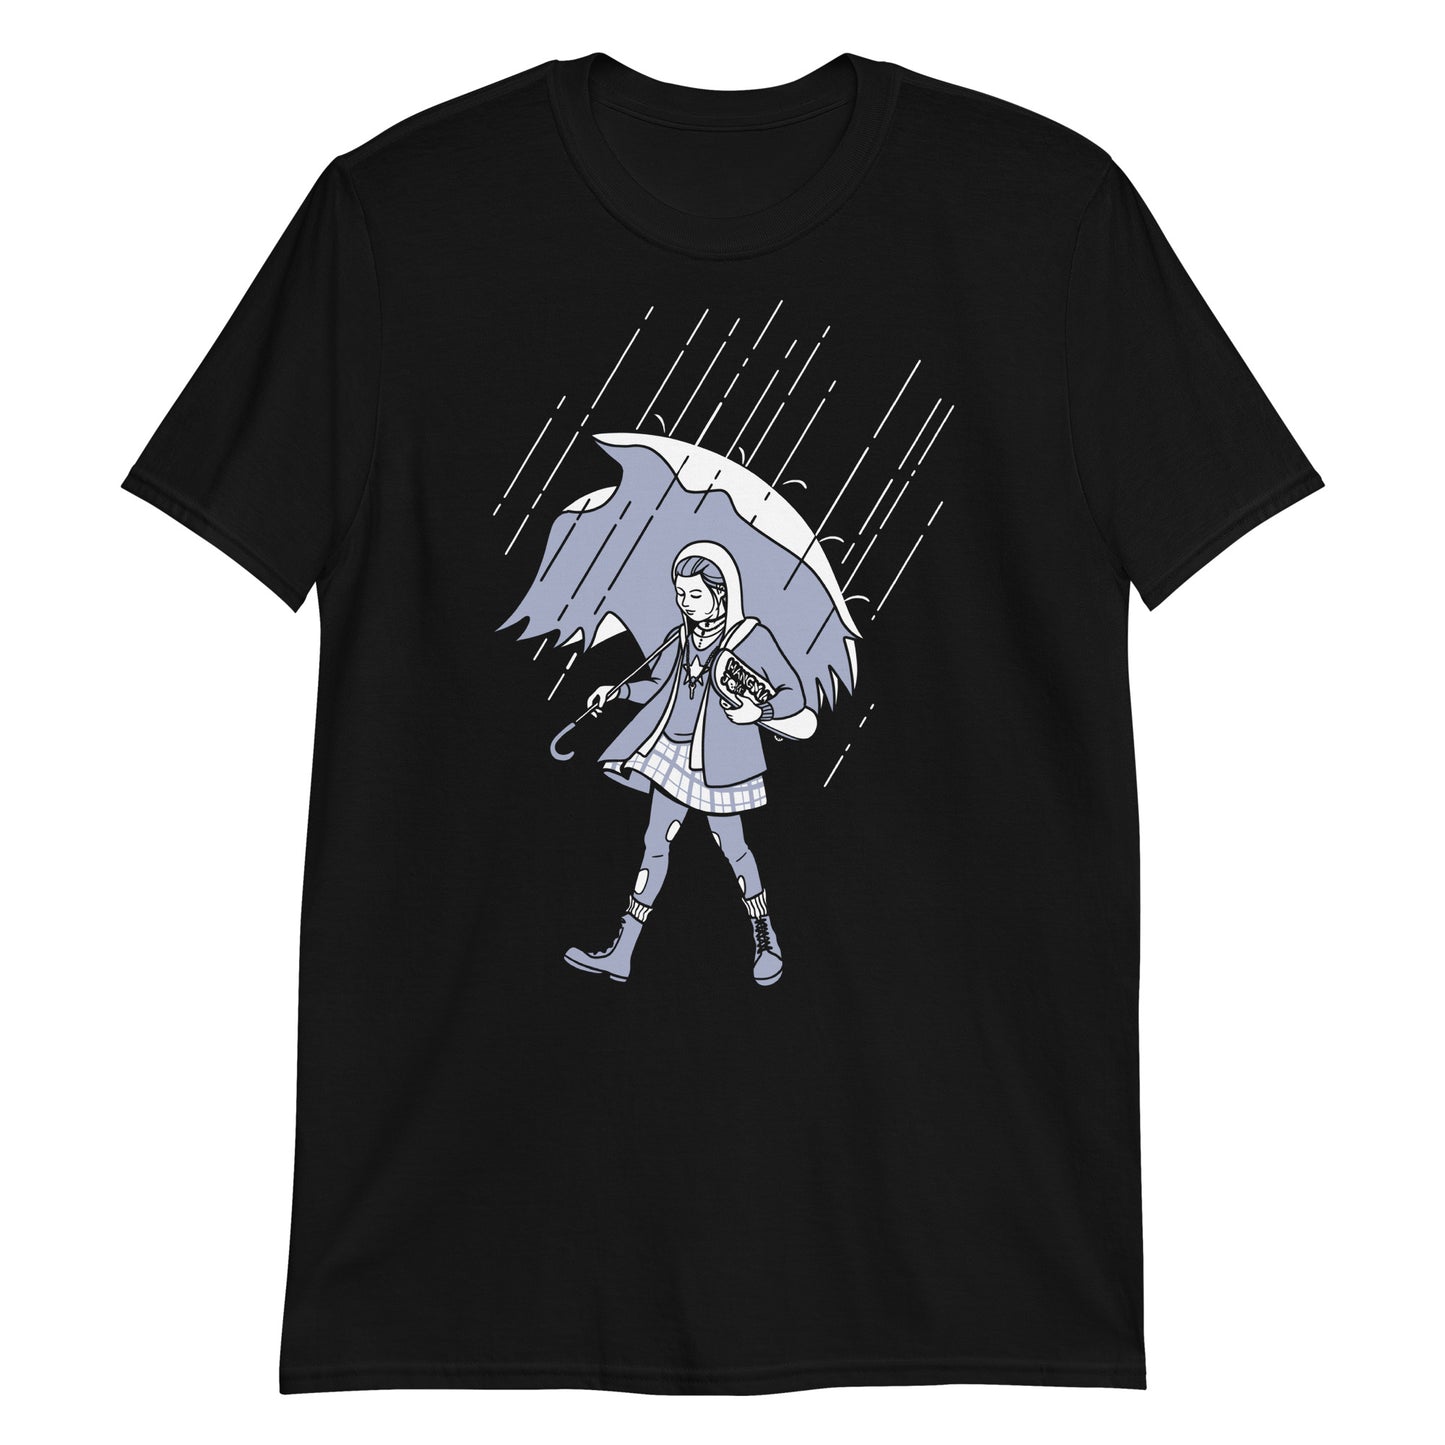 It Can't Rain Salt All the Time t-shirt